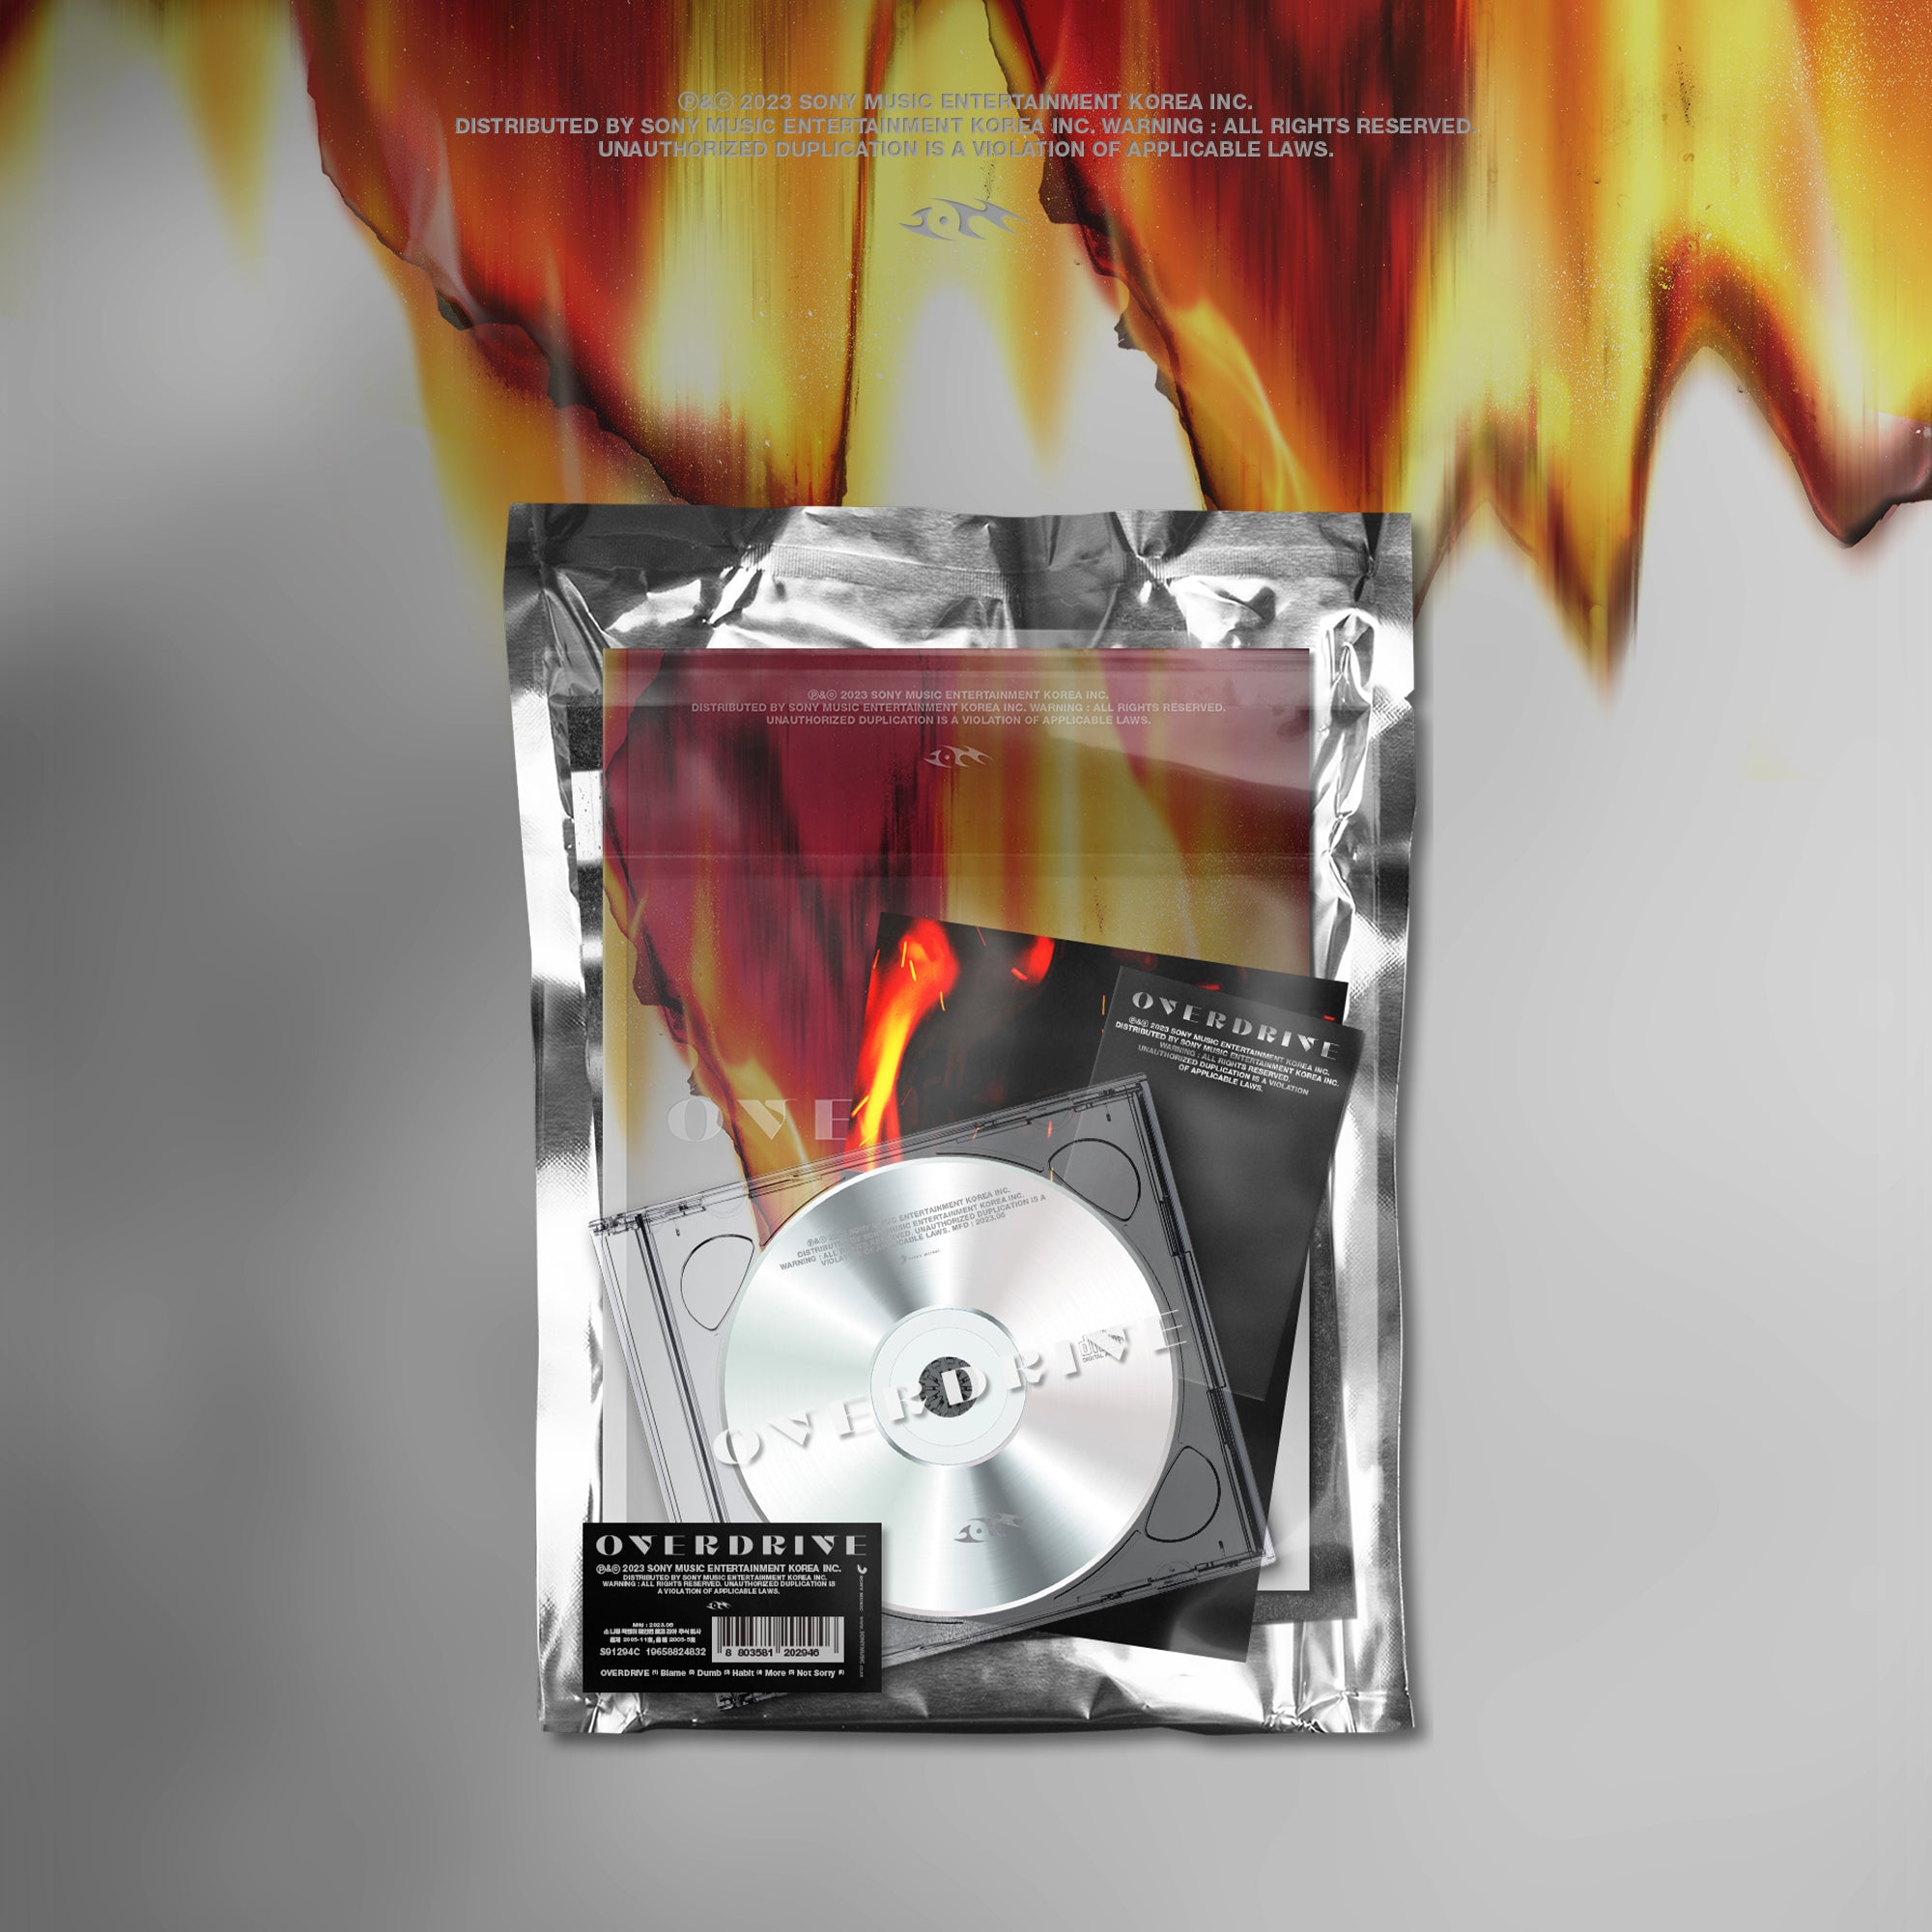 I.M EP ALBUM 'OVERDRIVE' METAL VERSION COVER